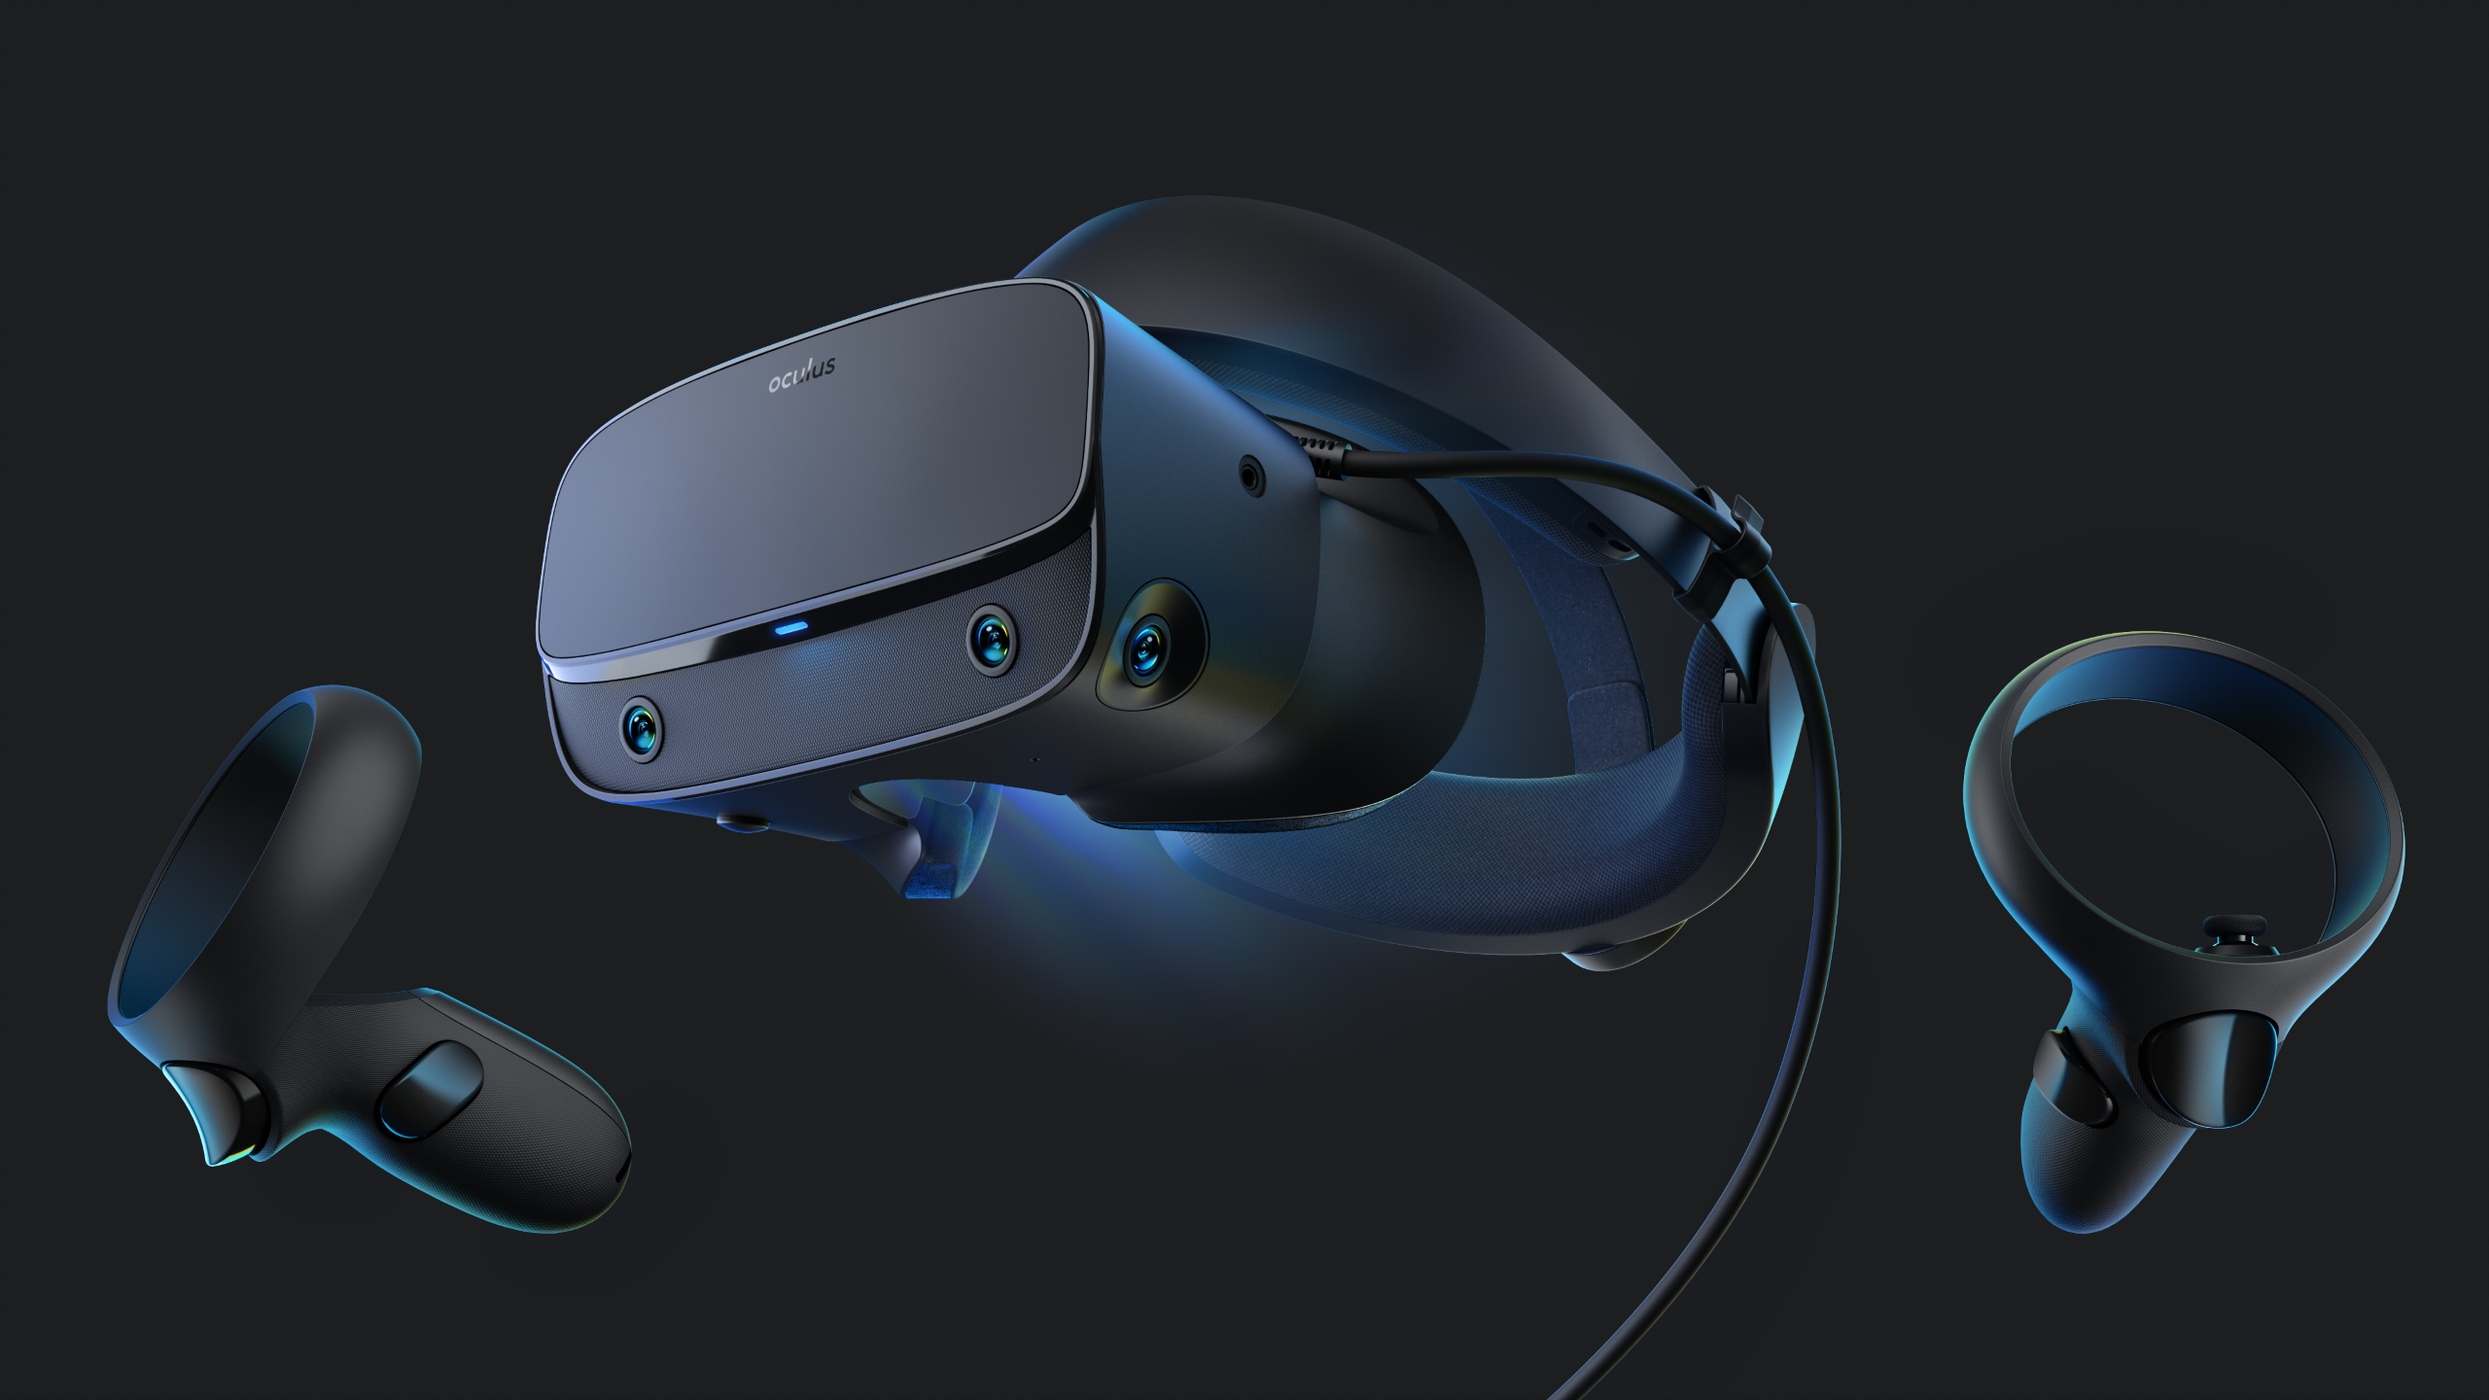 Best VR Headset For Elite Dangerous 2020 - Immersive Adventures In Space